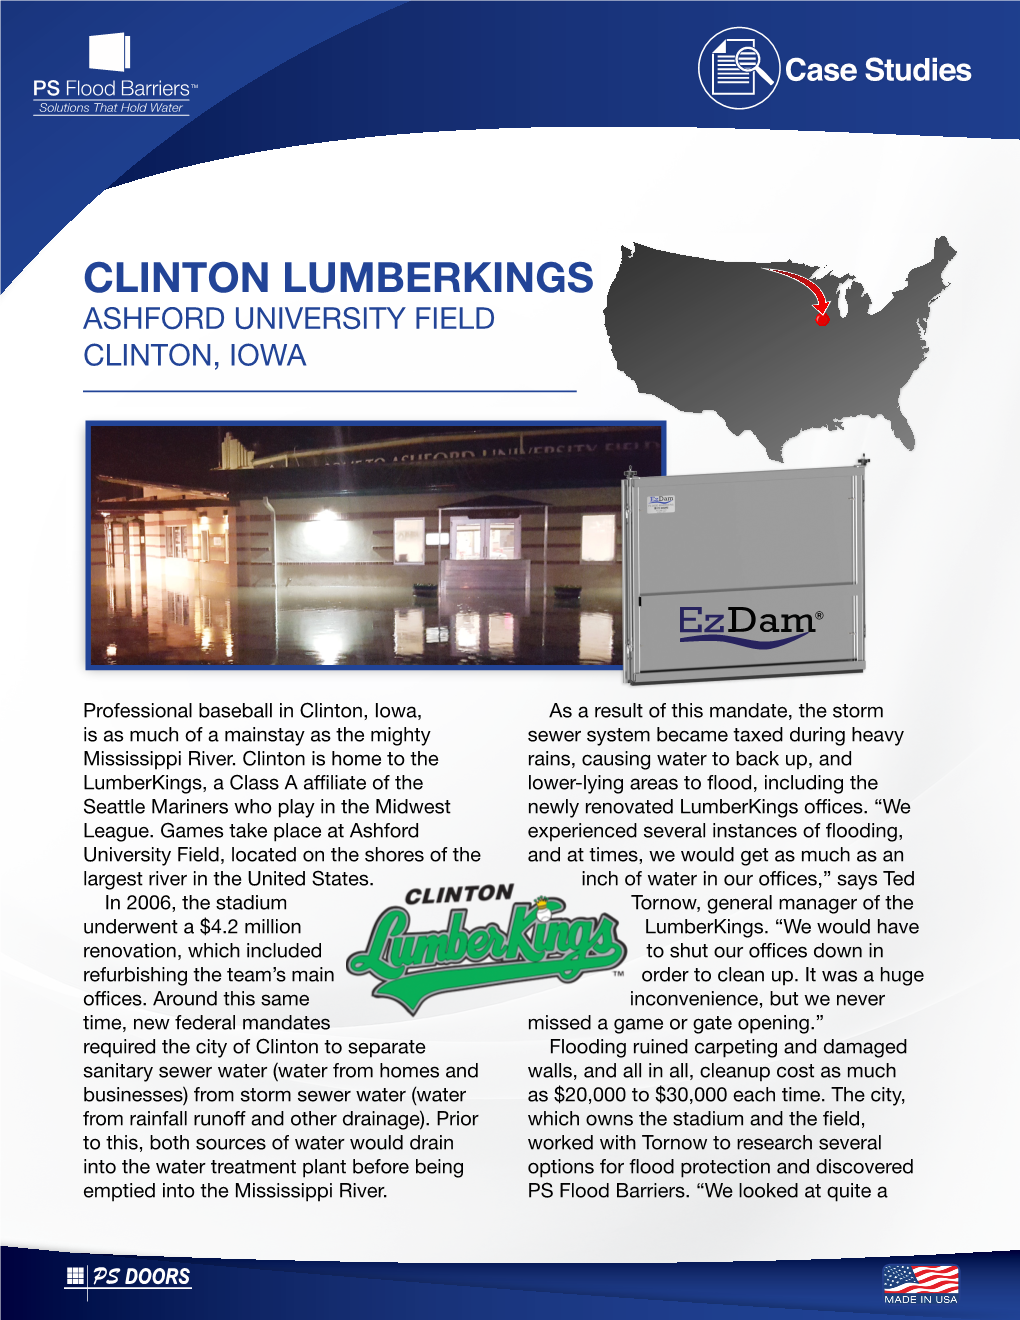 Clinton Lumberkings Ashford University Field Clinton, Iowa